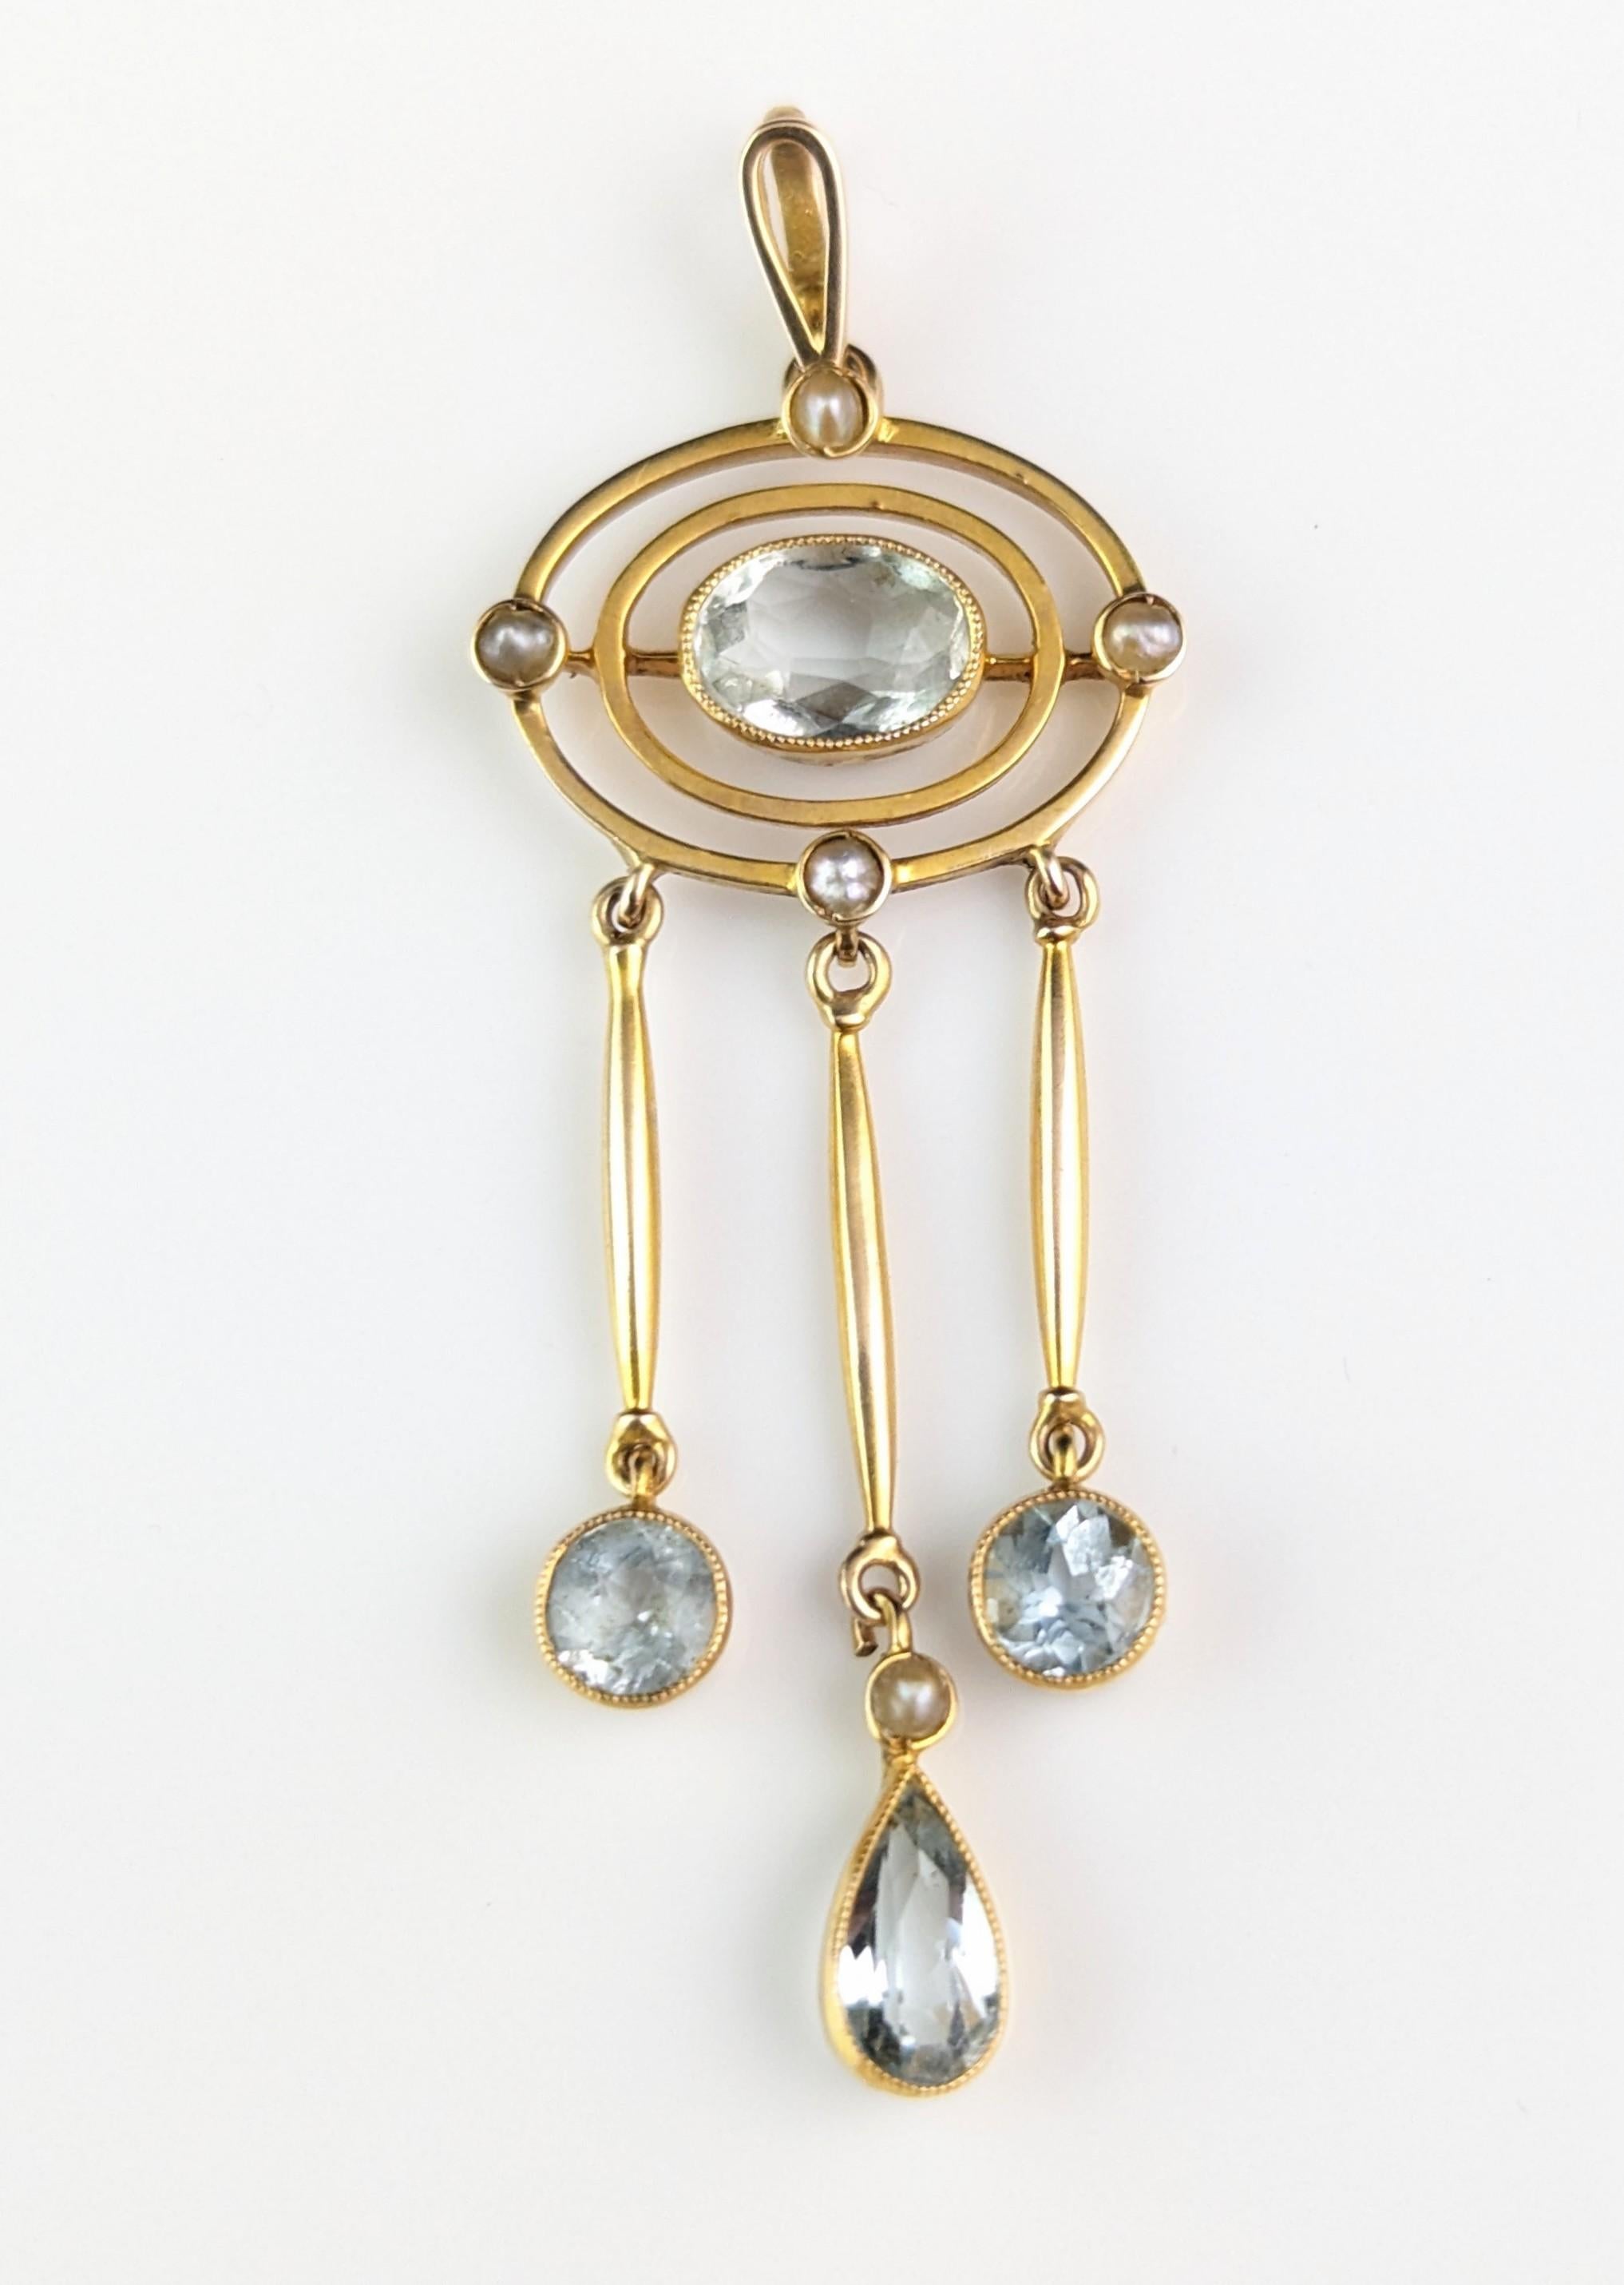 Antique Aquamarine drop pendant, 15k yellow gold, Pearl For Sale 7